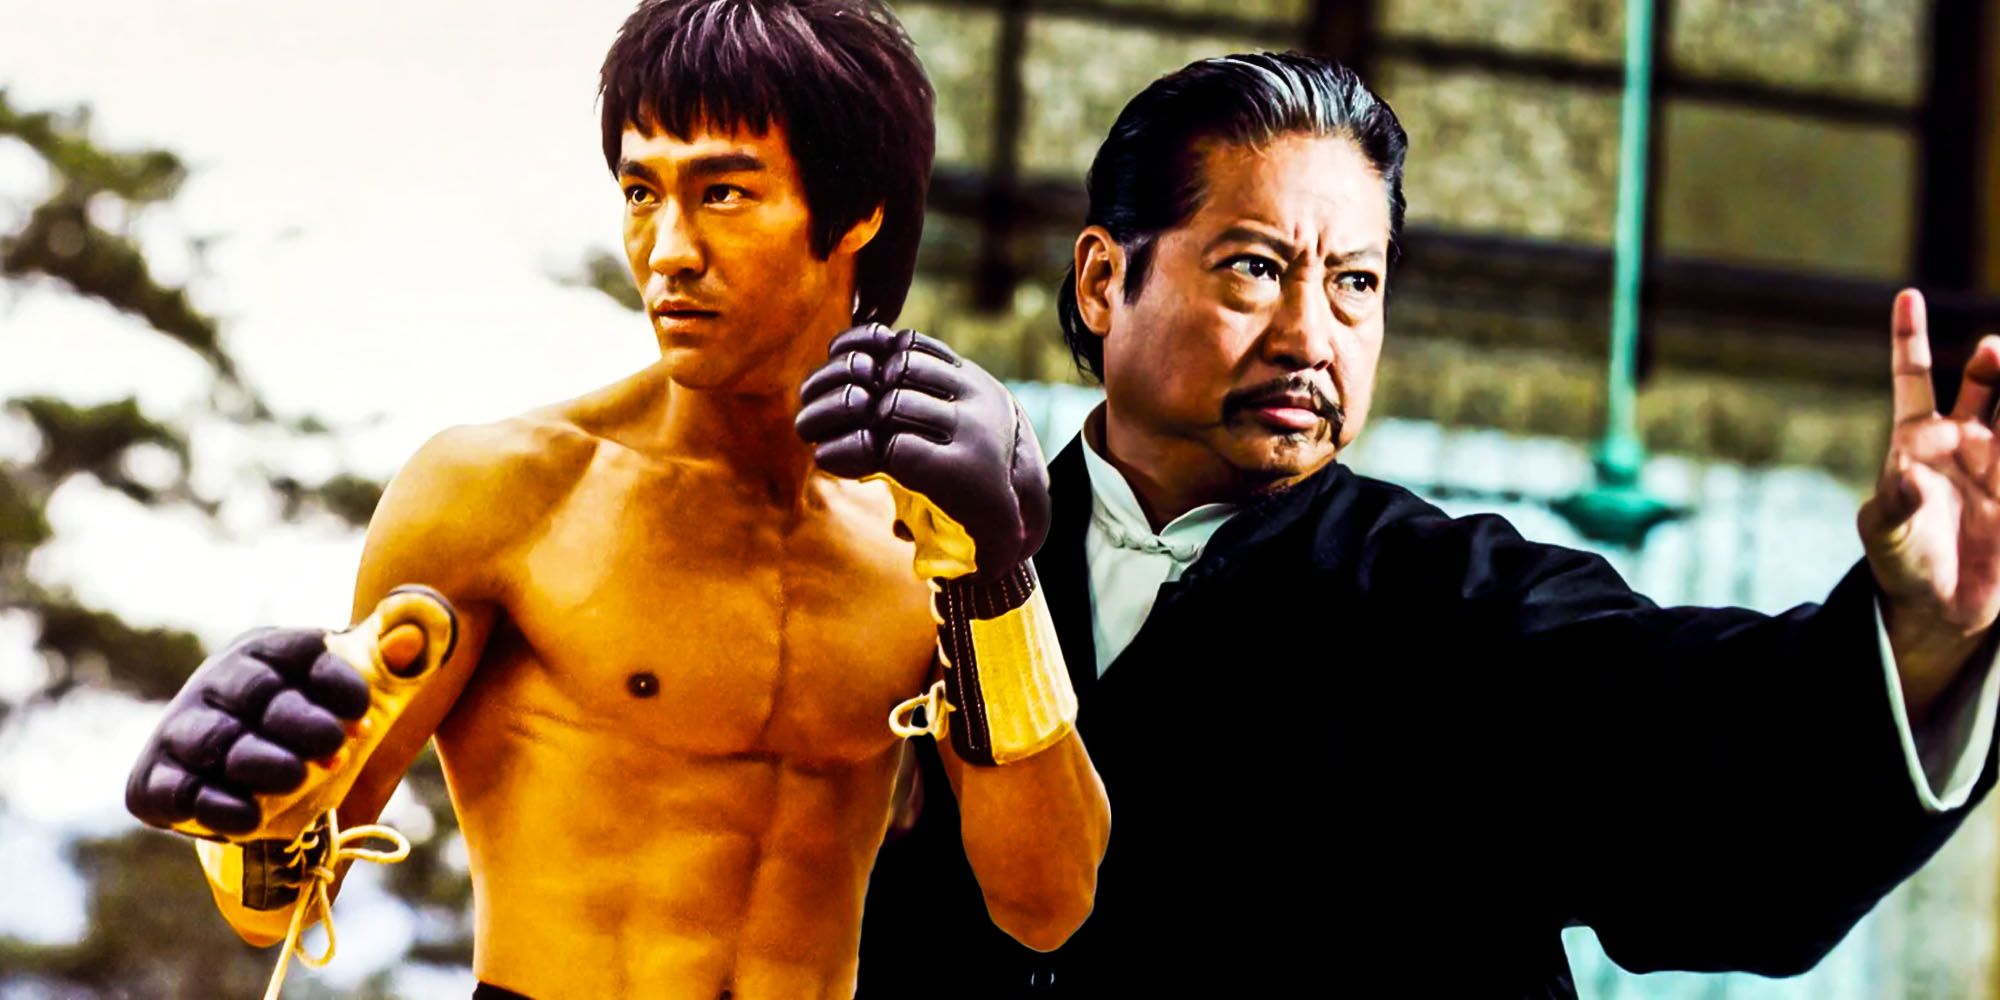 Bruce Lee vs Sammo Hung who won